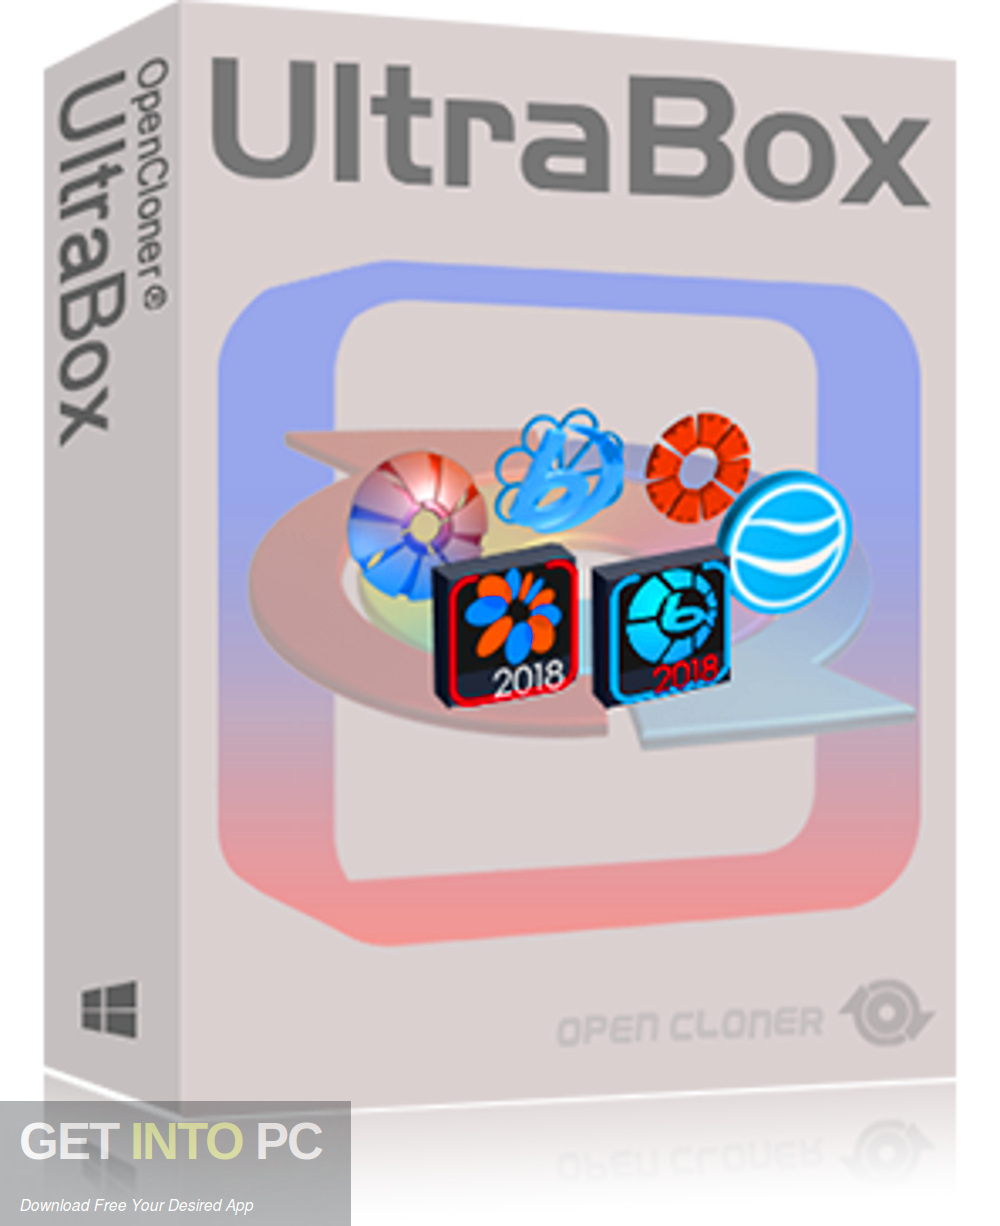 OpenCloner UltraBox Pro 2019 Free Download GetintoPC.com